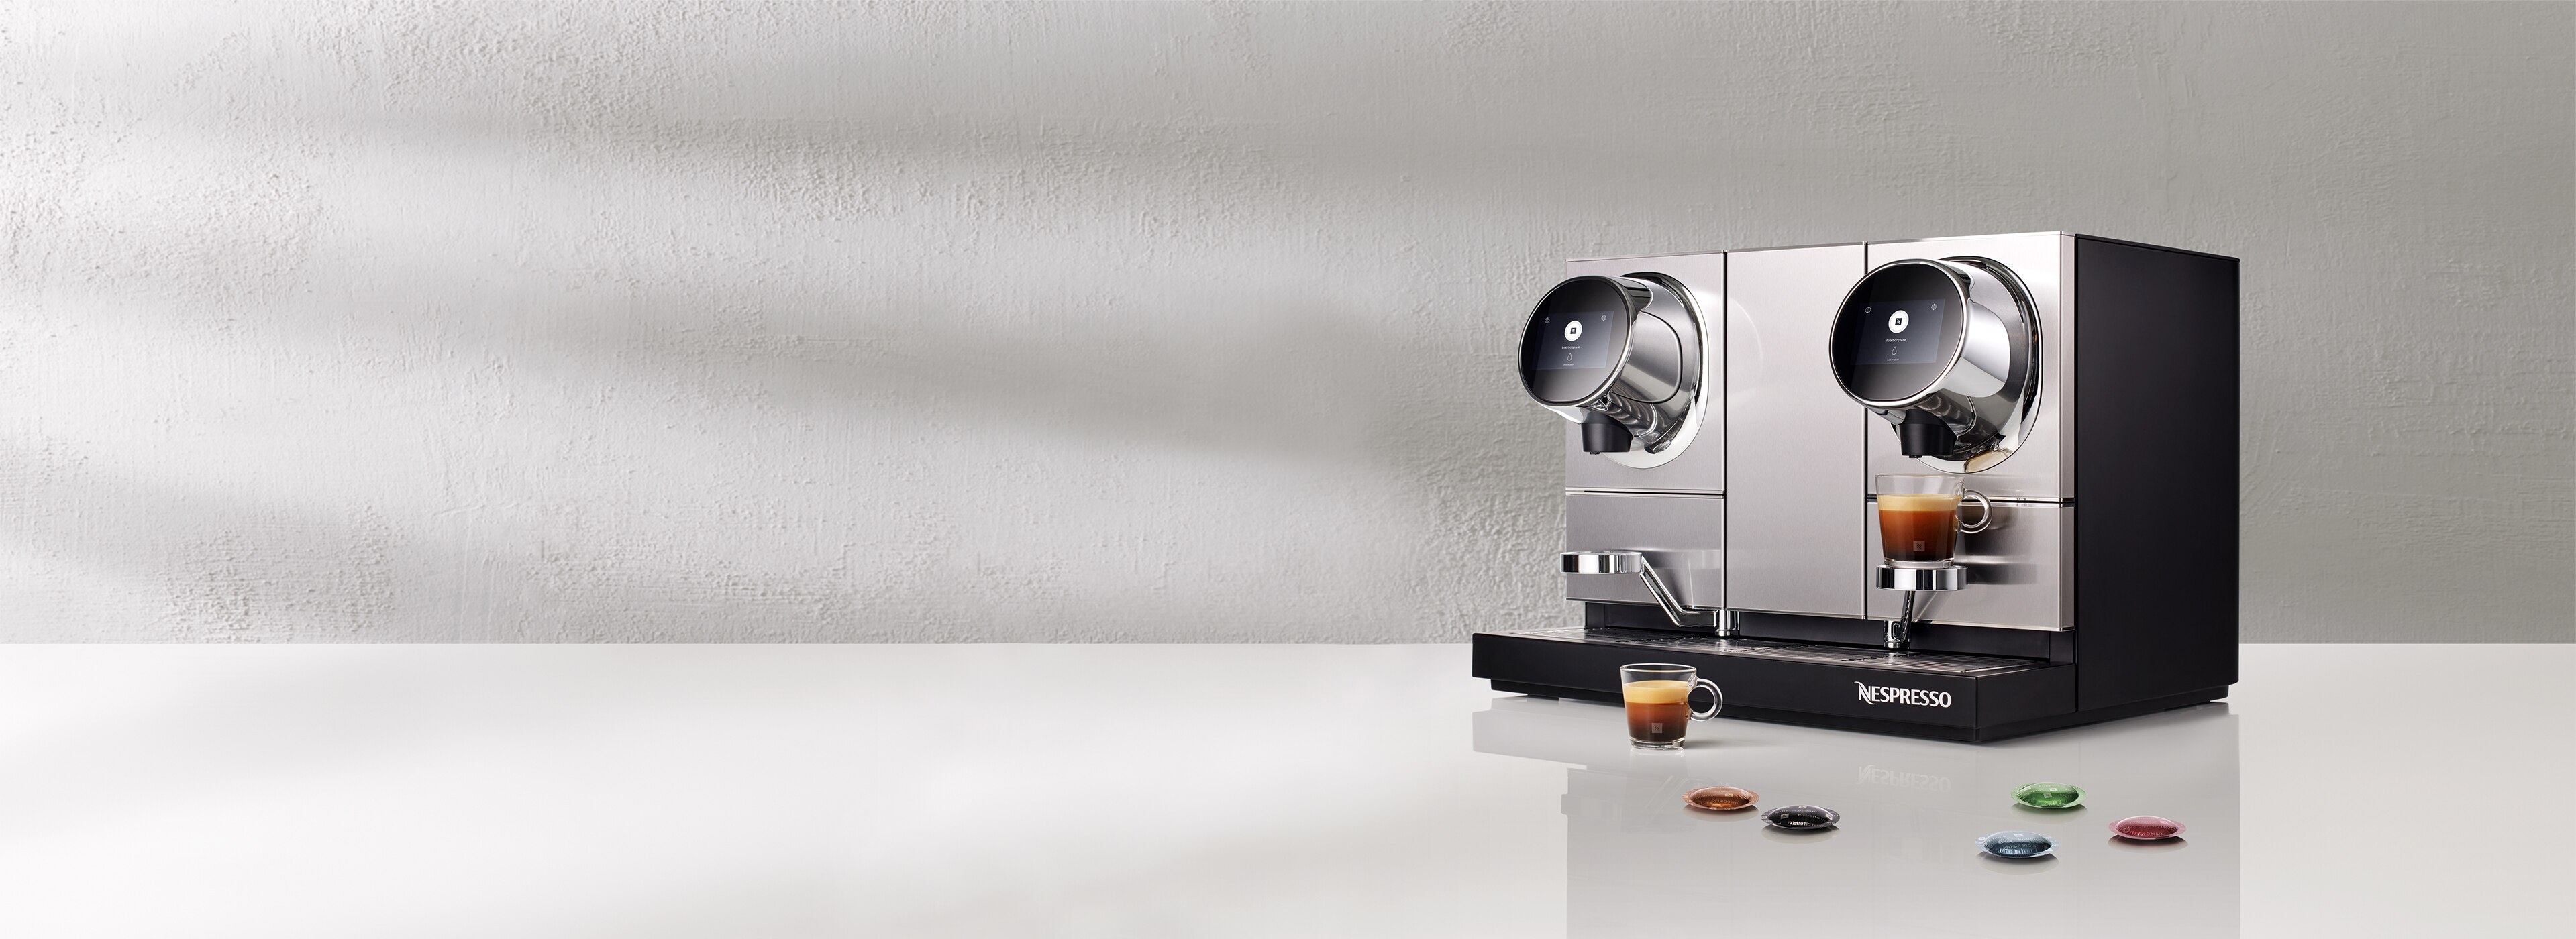 Nespresso Momento coffee machine